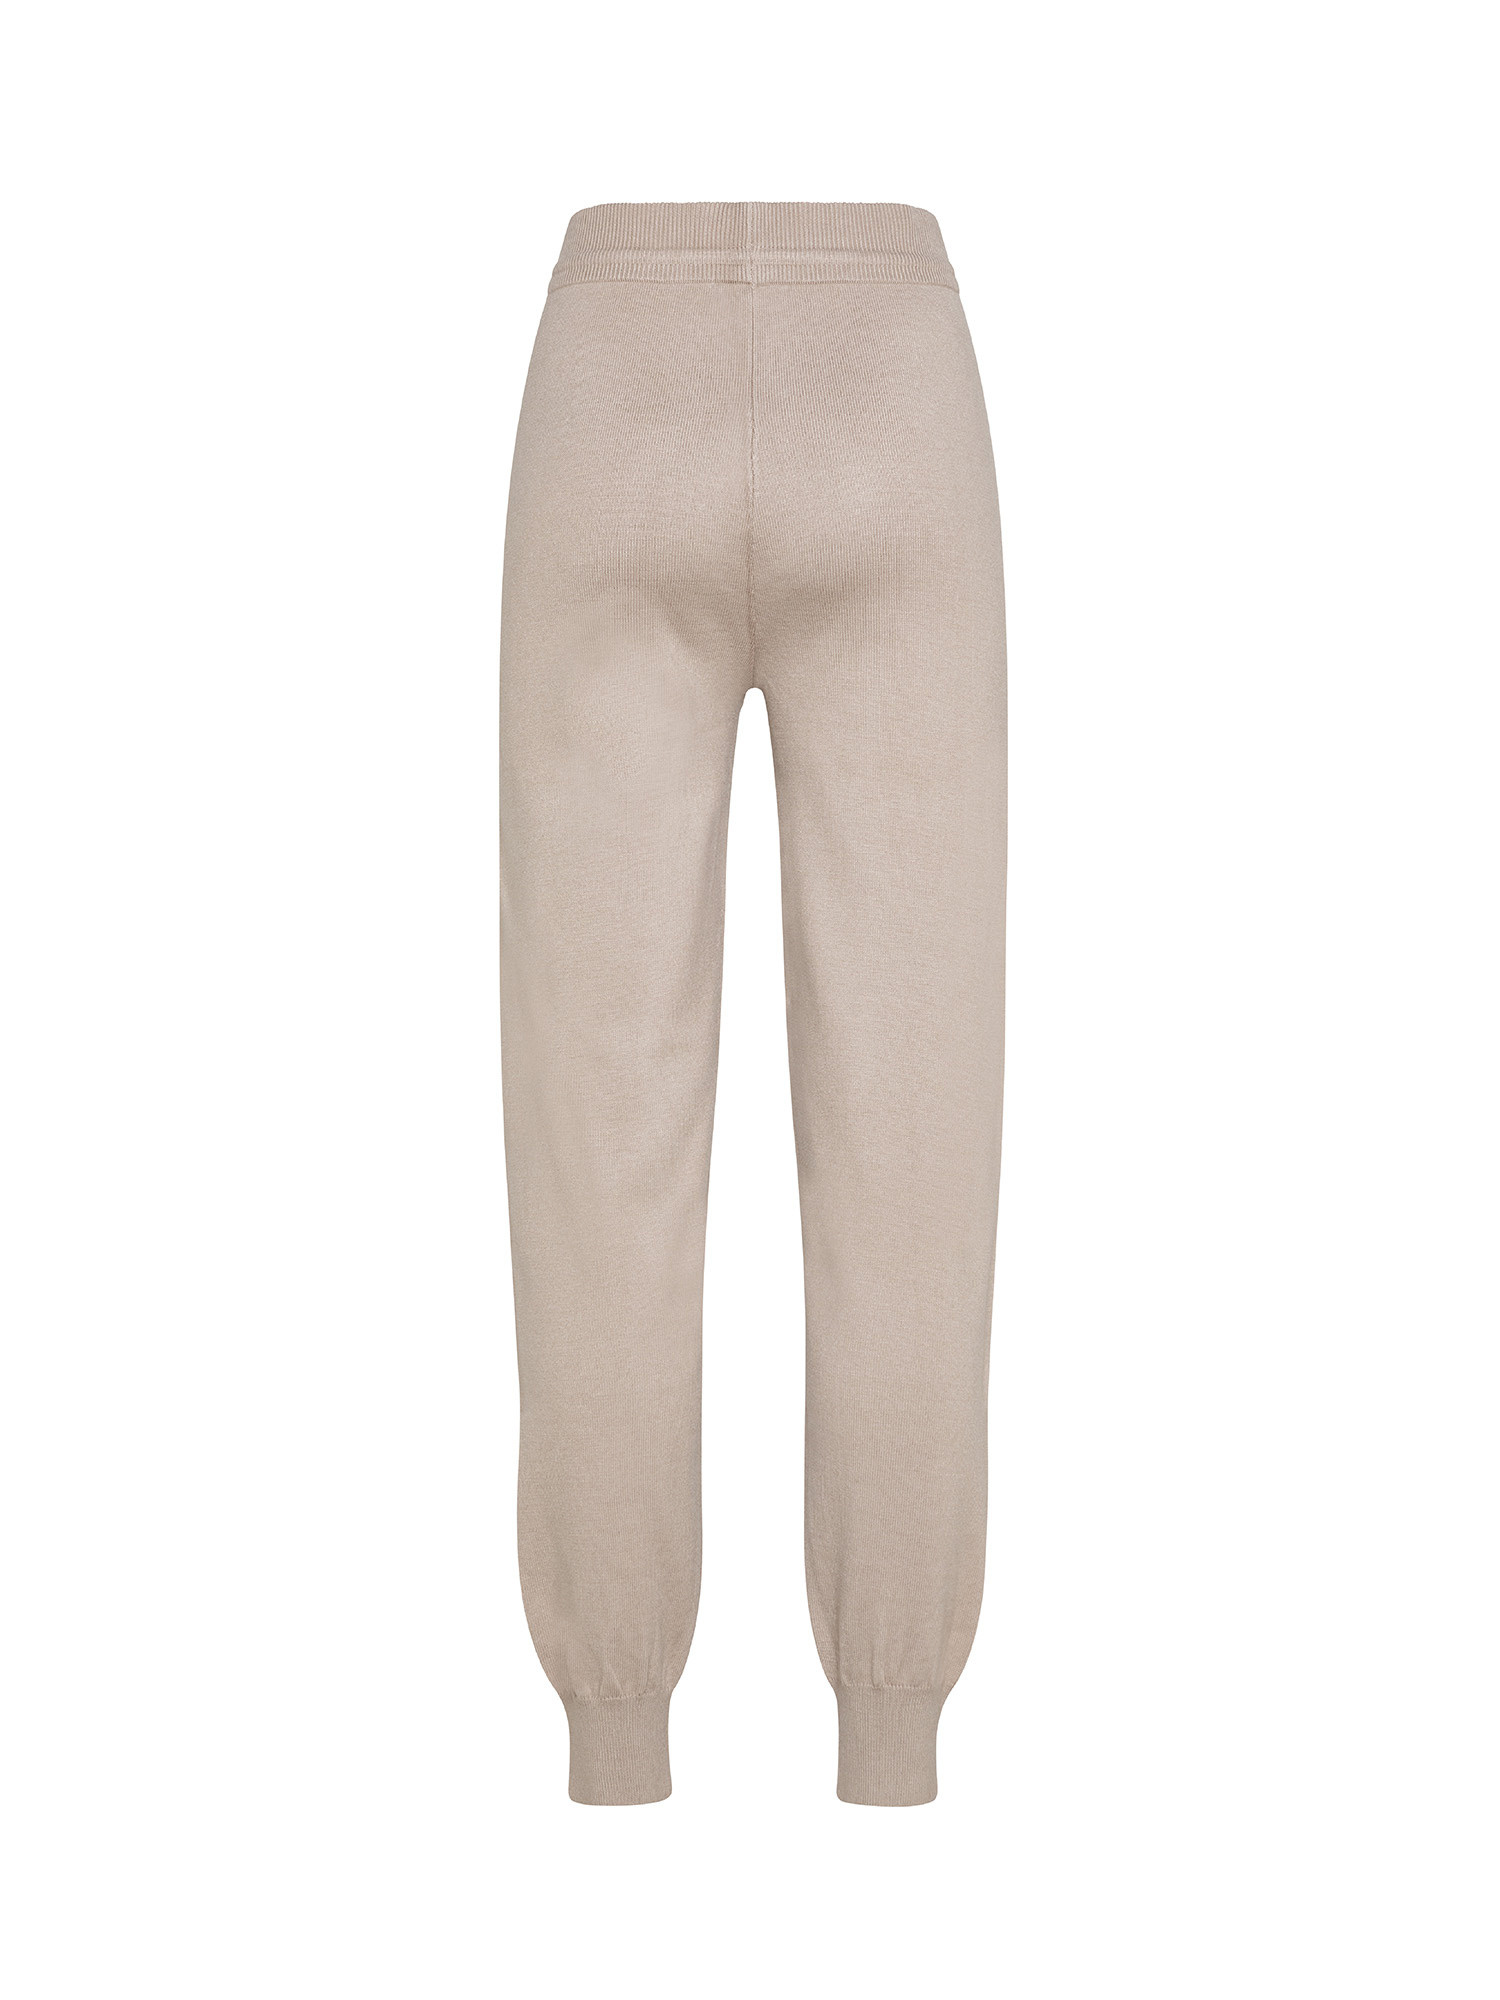 Koan - Pantalone a costine tricot, Beige, large